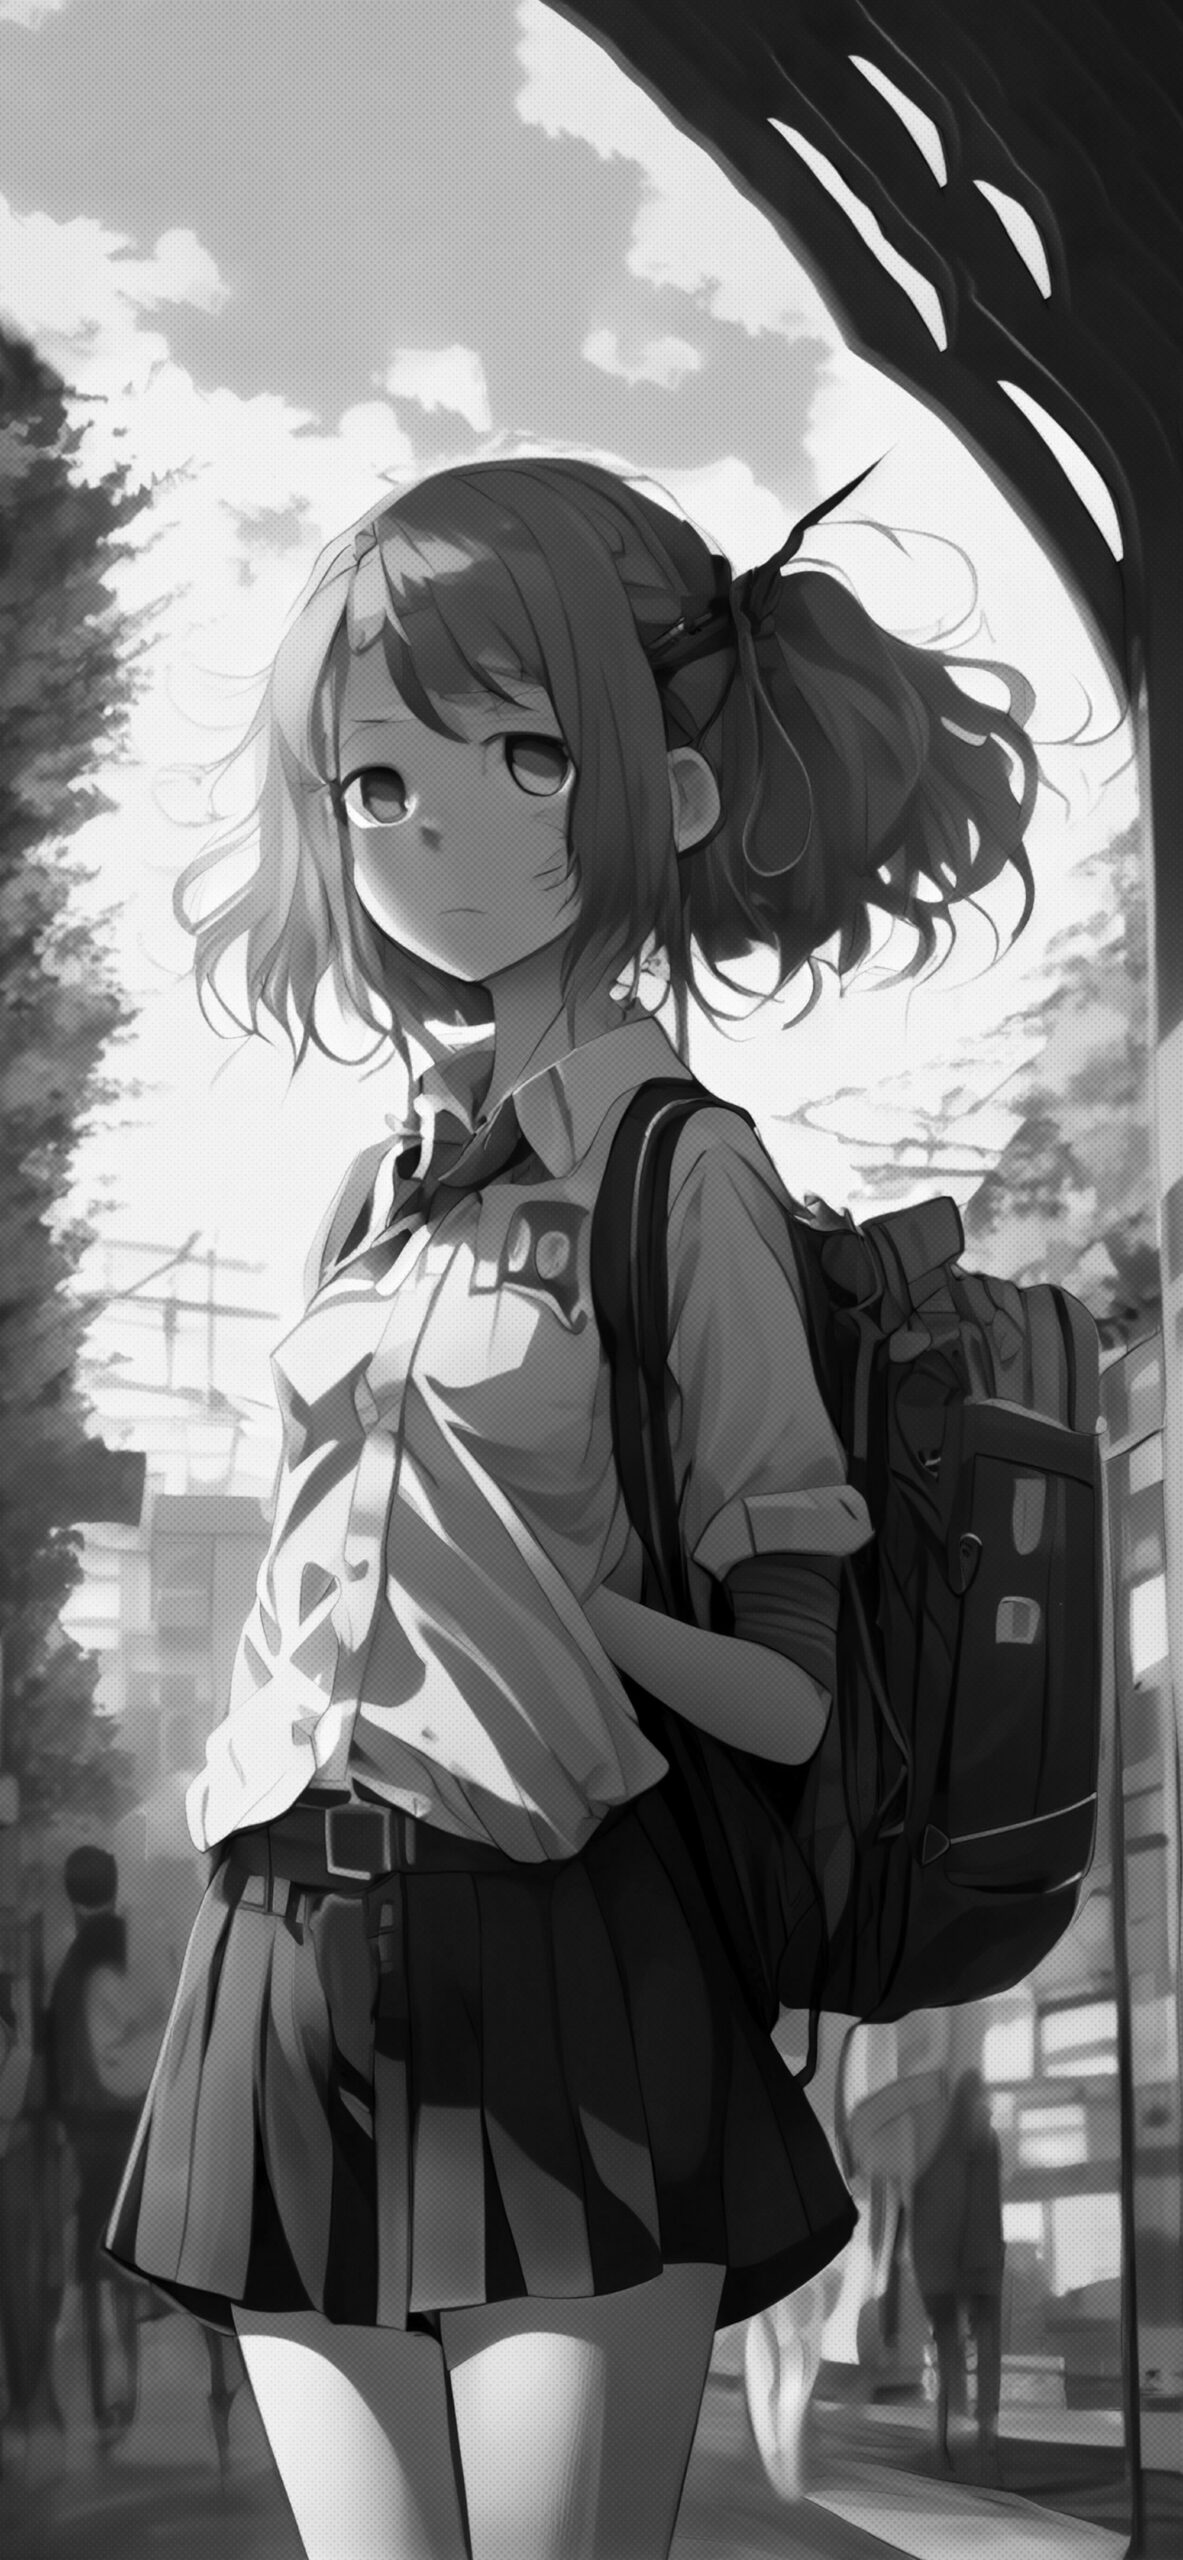 anime schoolgirl with backpack wallpaper 2